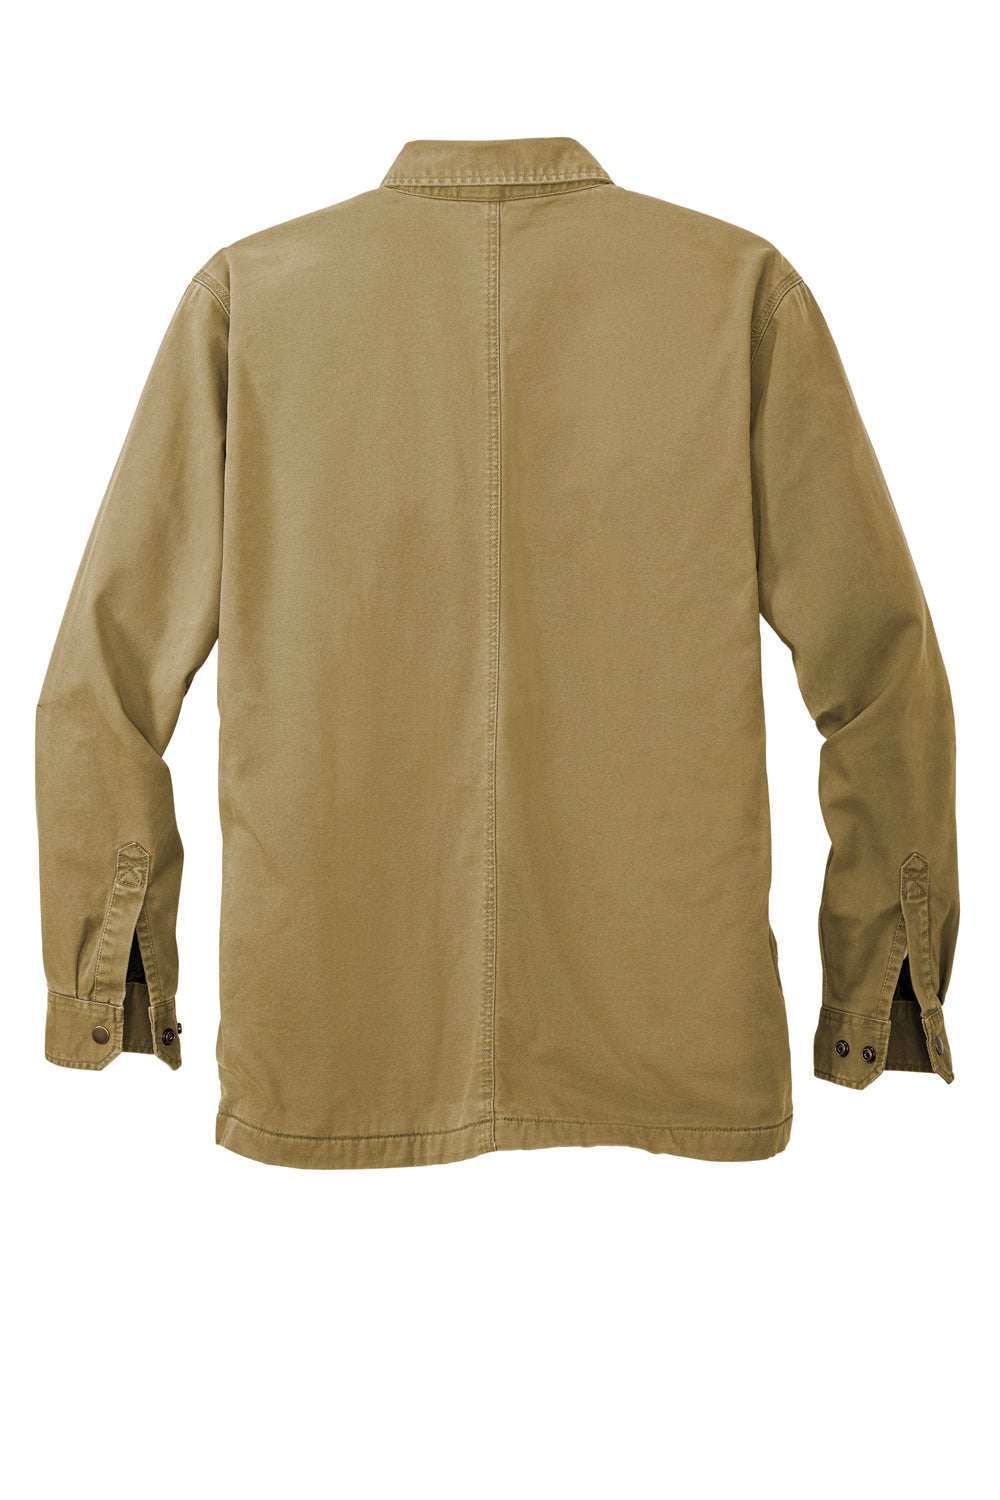 Carhartt CT105532 Mens Rugged Flex Button Down Shirt Jacket Dark Khaki Brown Flat Back